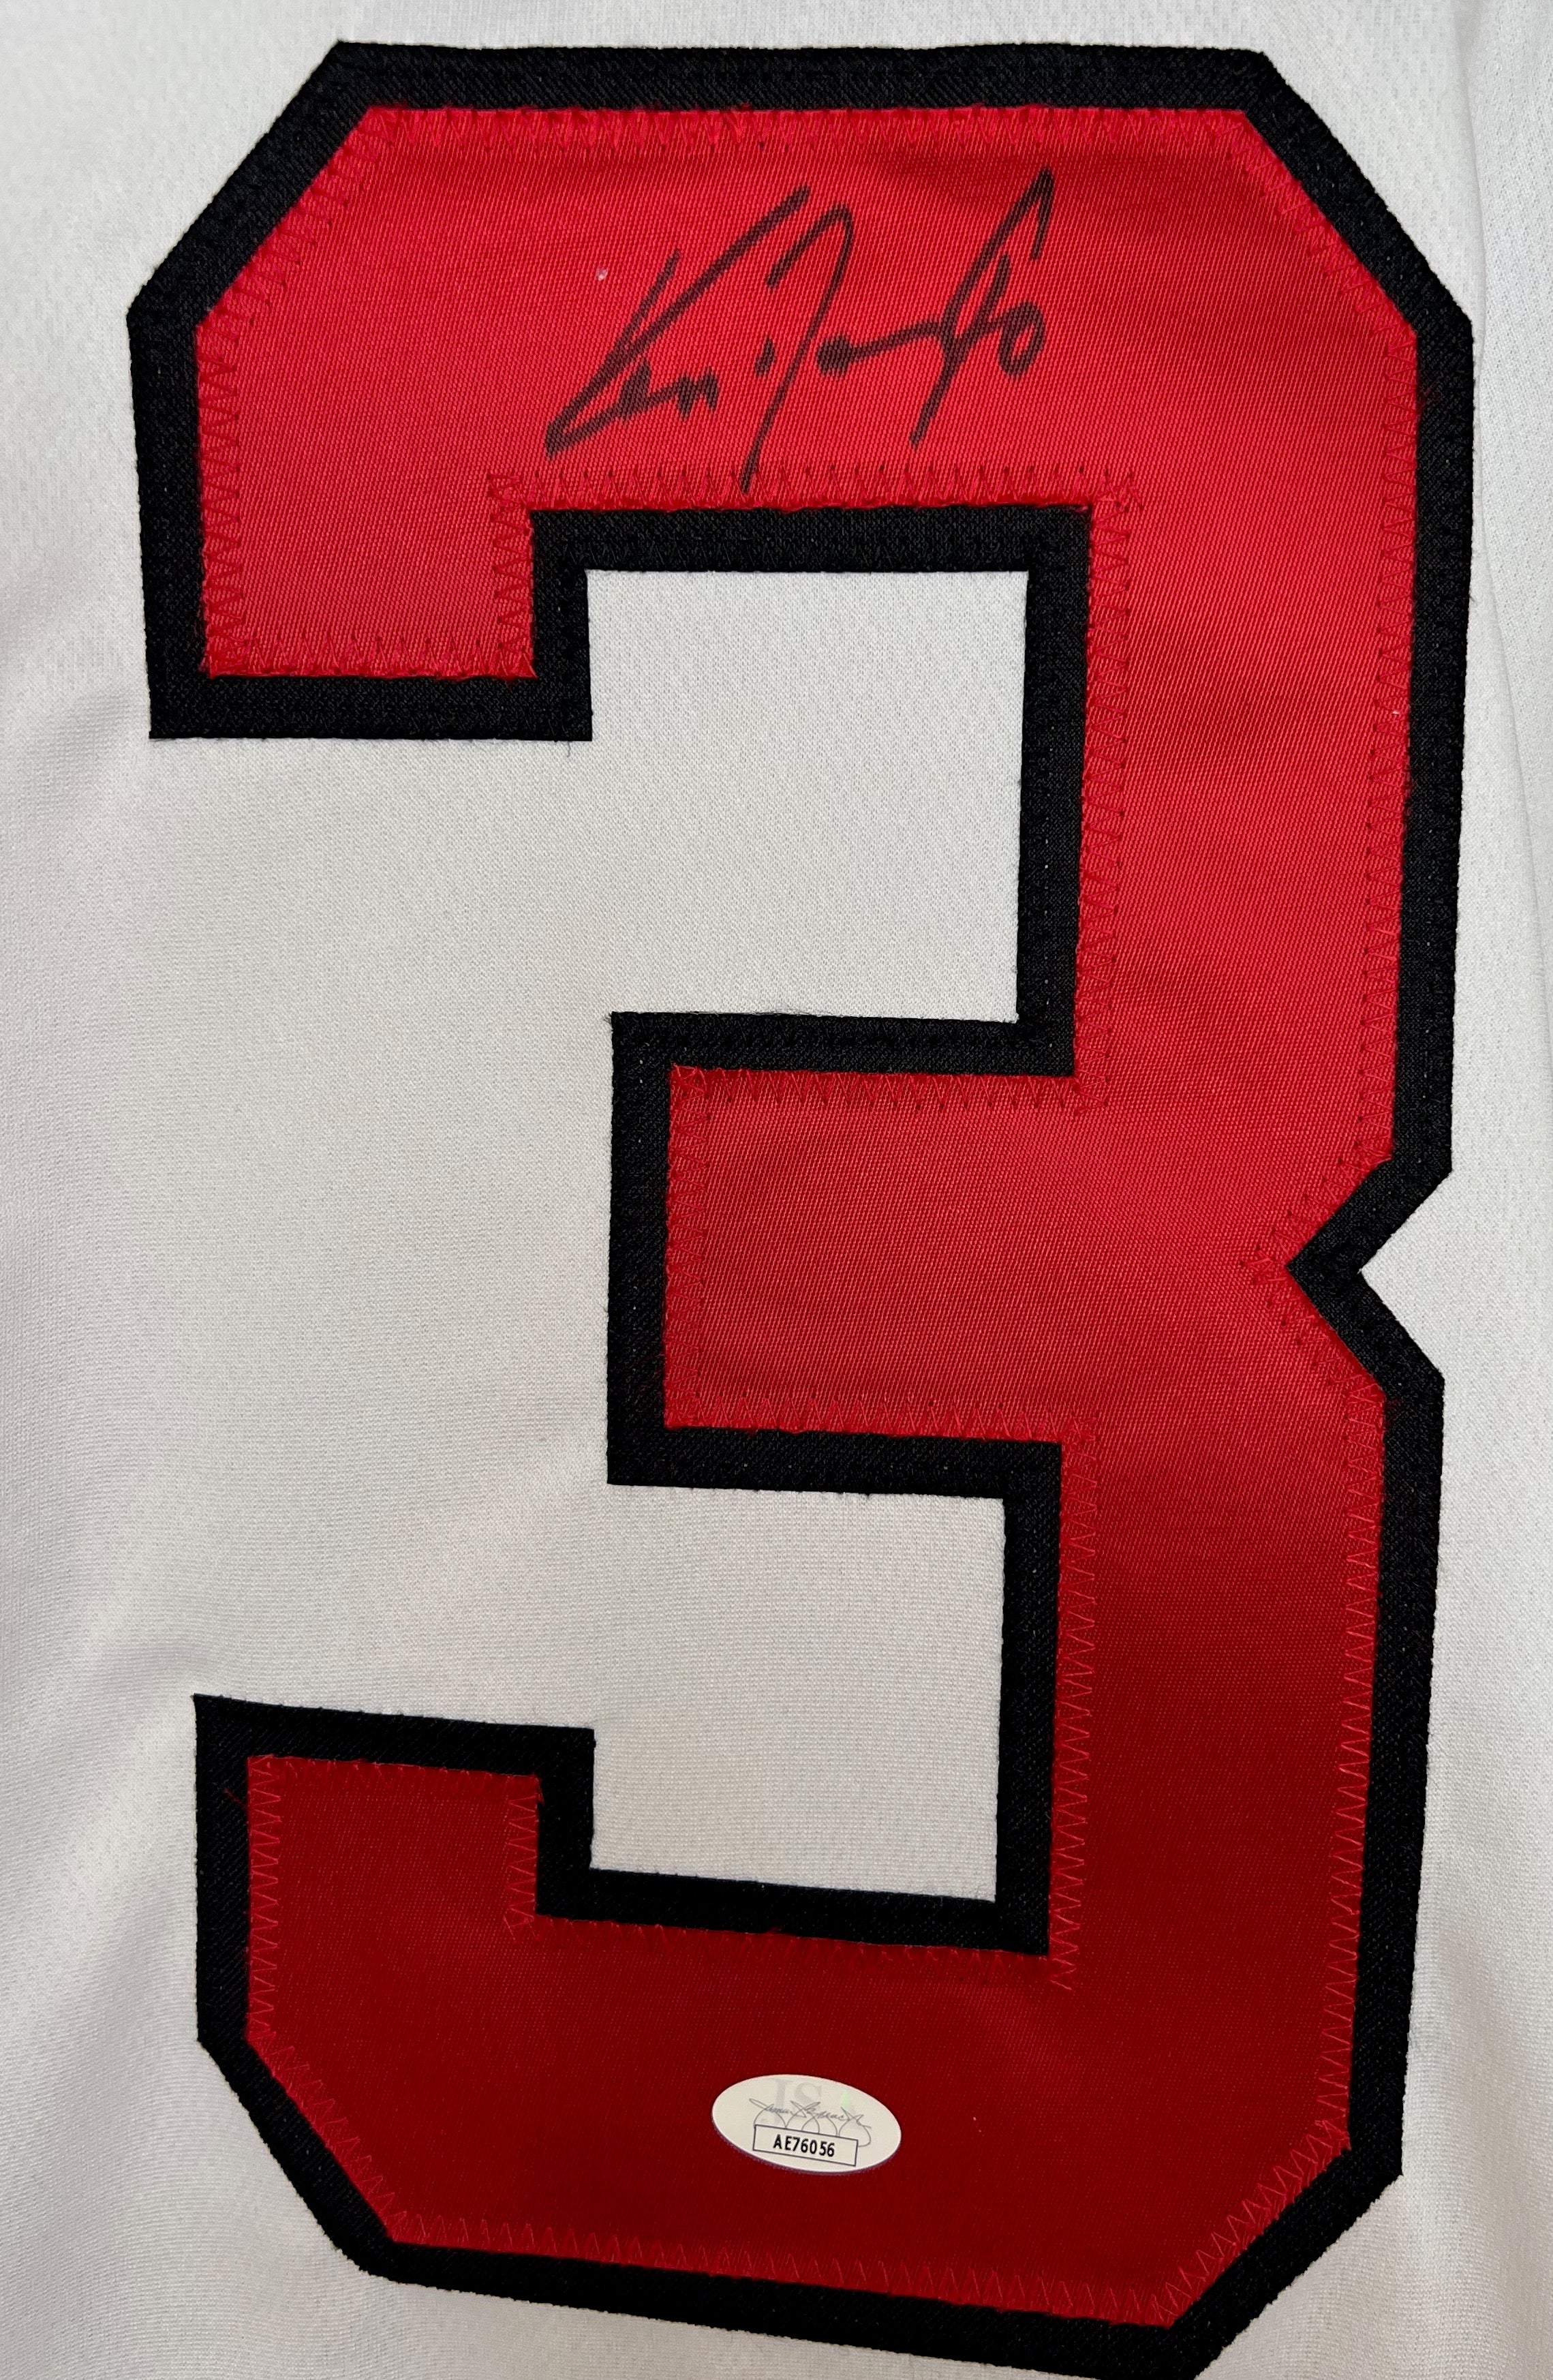 Ken Daneyko New Jersey Devils Autographed Signed Stanley Cup